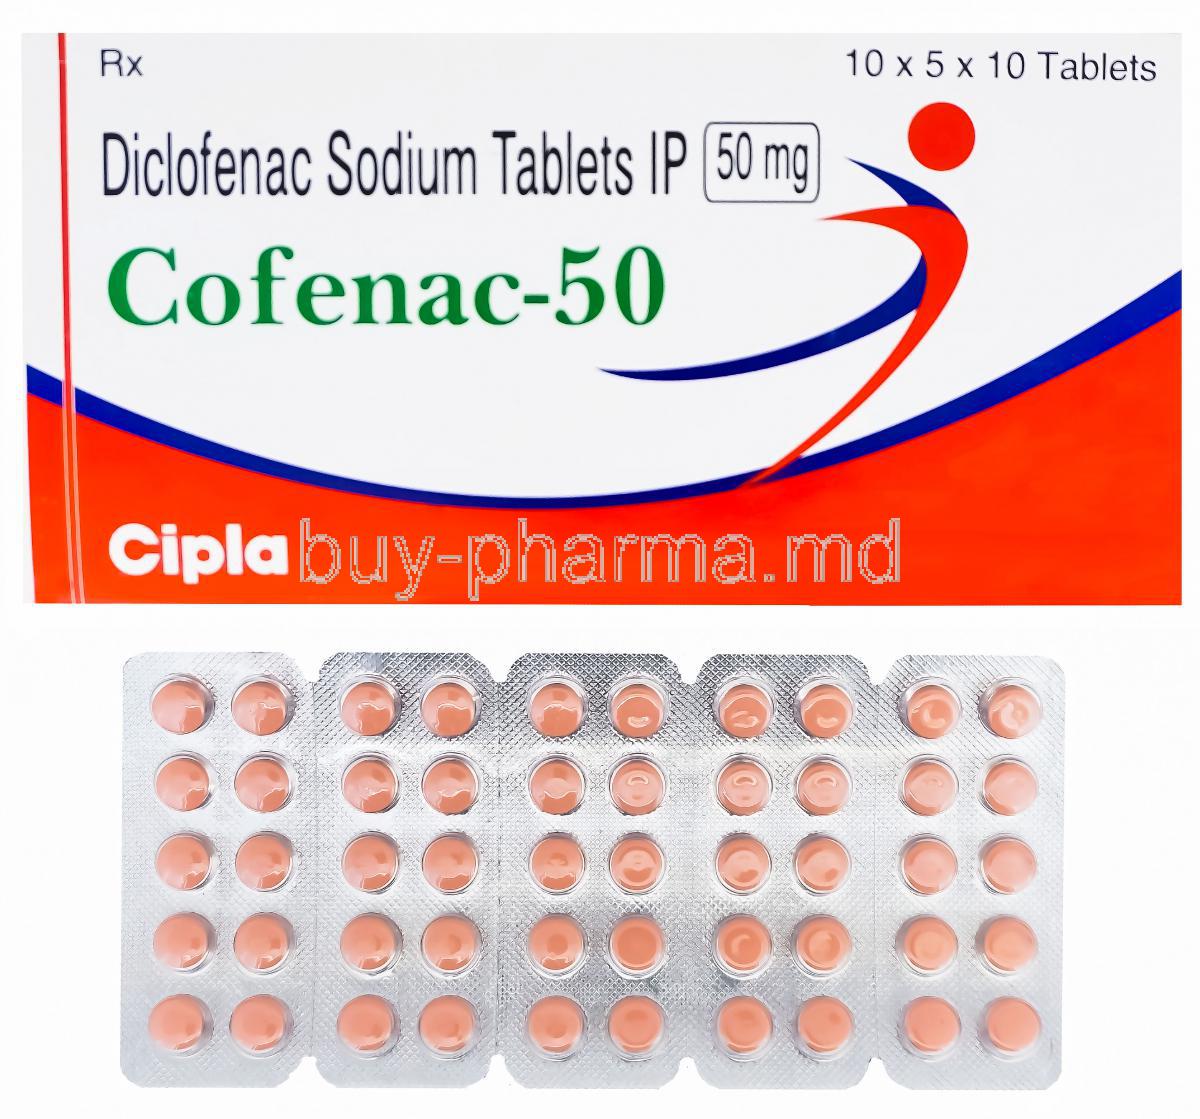 Cofenac-50, Generic Voltaren, Diclofenac Sodium 50mg